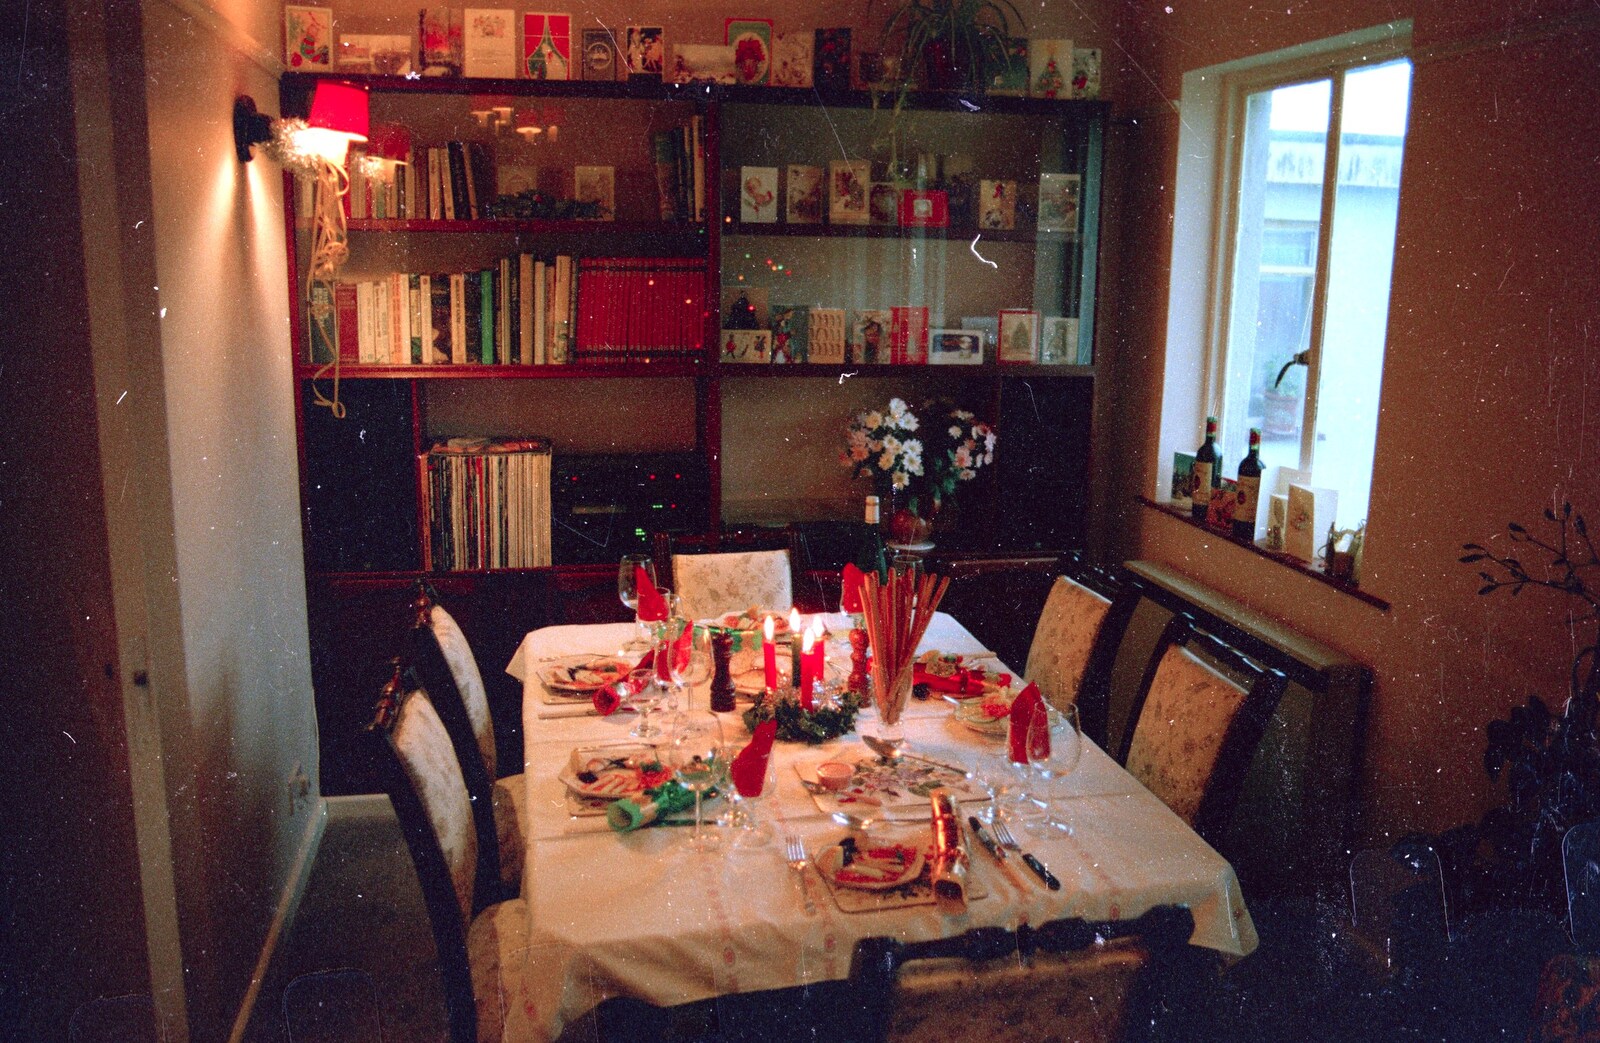 The Bracken Way dining room from A Bit of Bracken Way Pre-Christmas, Walkford, Dorset - 24th December 1986